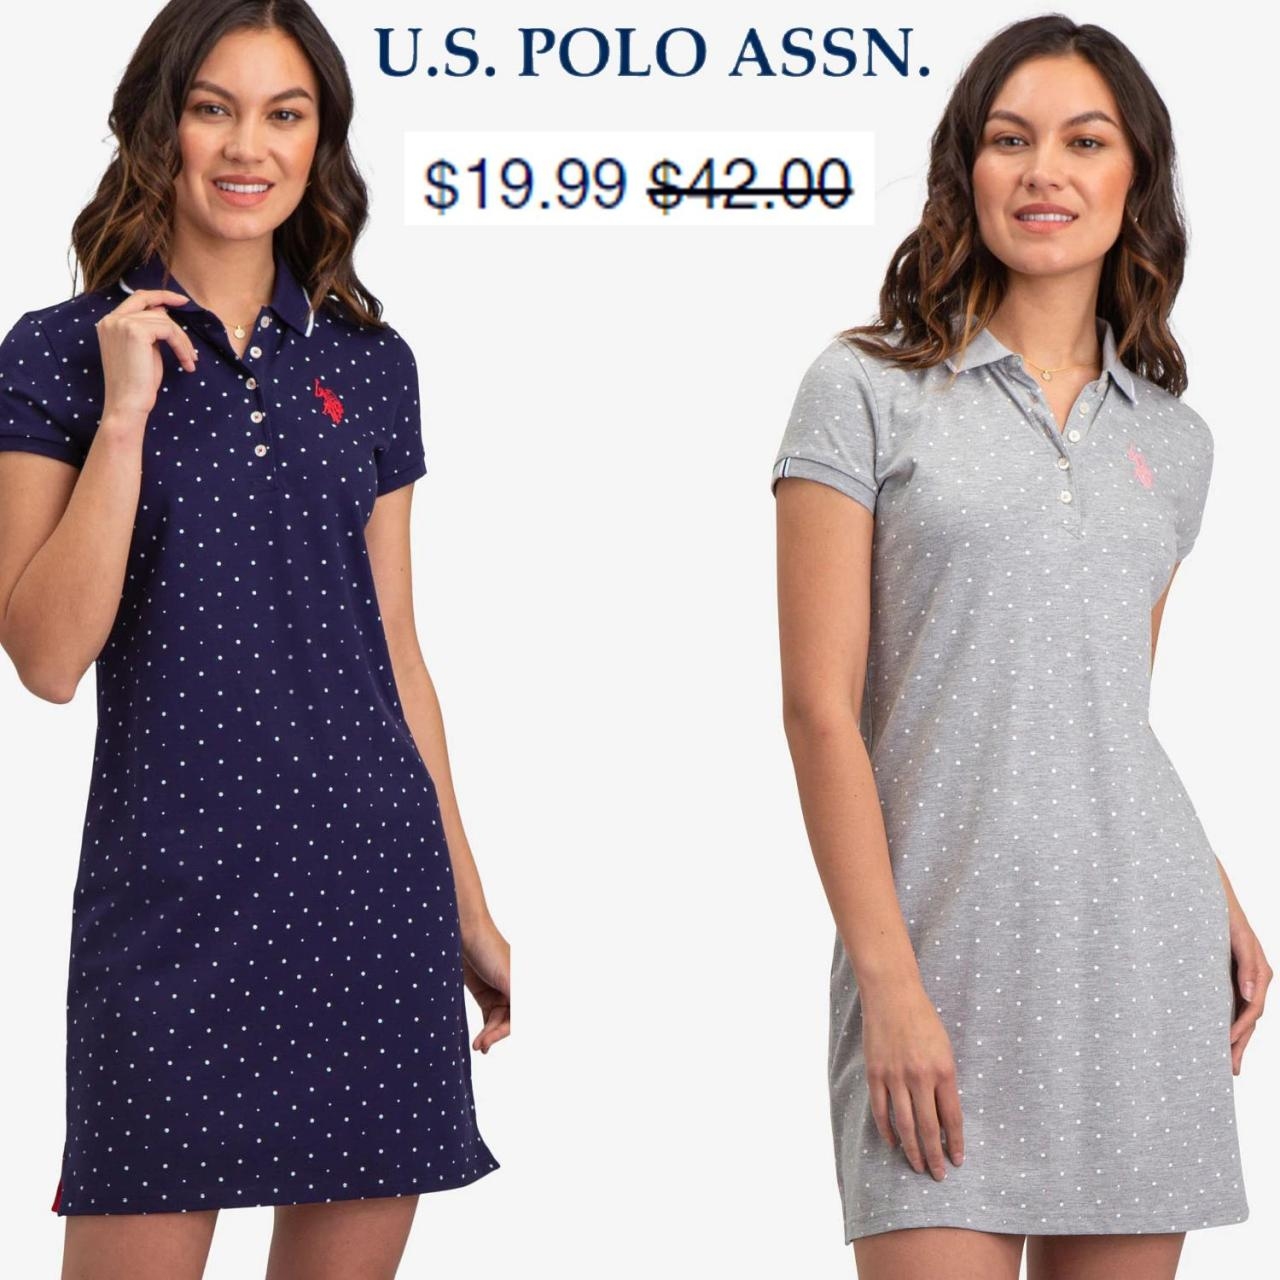 Платье Polo Assn 98826. Us Polo Assn платье поло белое. Платье us Polo Assn. Us Polo Assn платье женское.